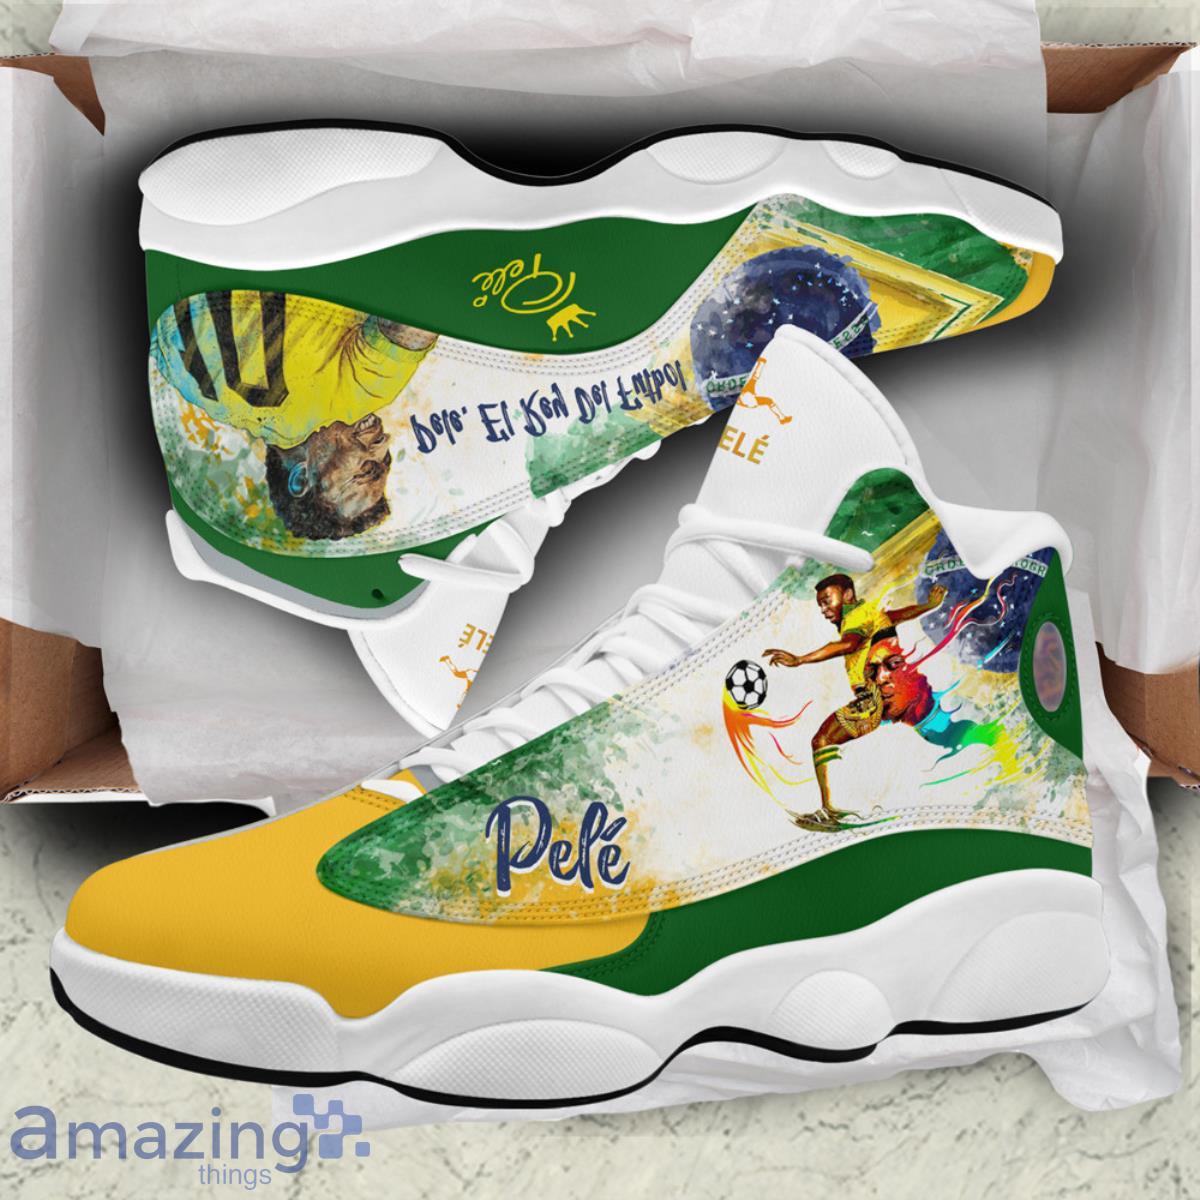 Pelé King Of Soccer Air Jordan 13 Shoes For Men Women Product Photo 2